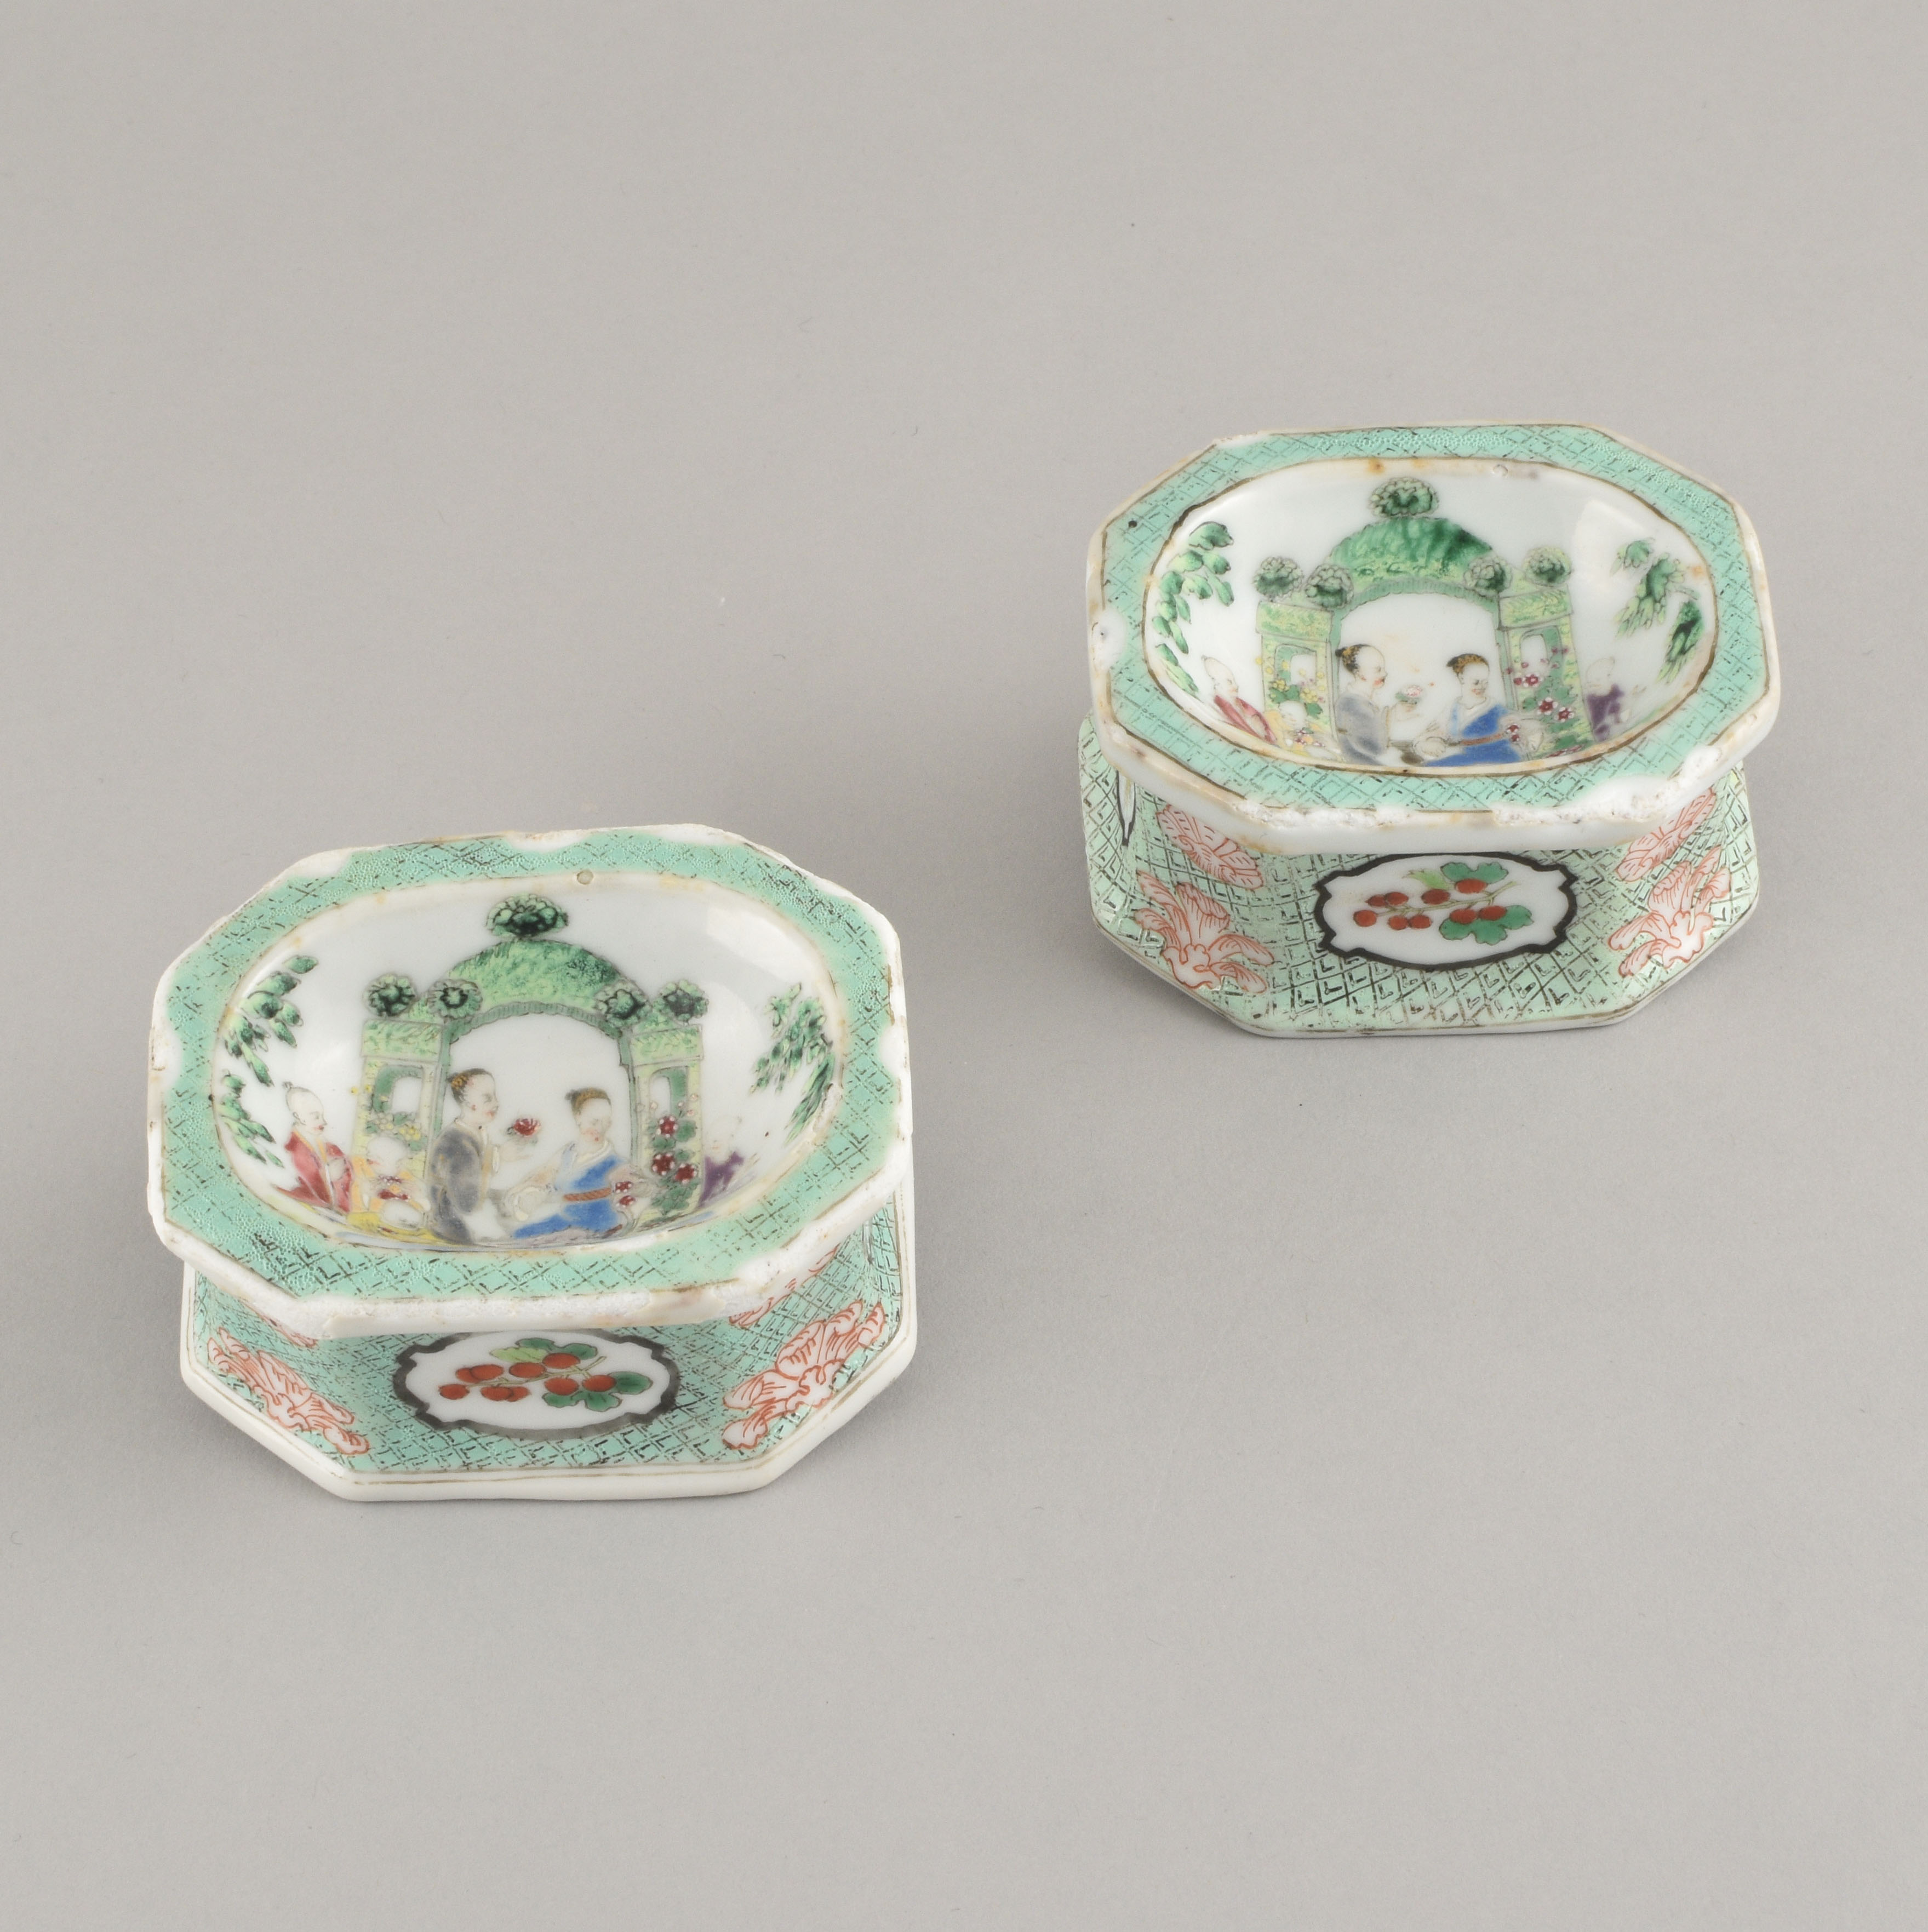 Porcelaine Qianlong period (1736-1795), circa 1738/1740, Chine